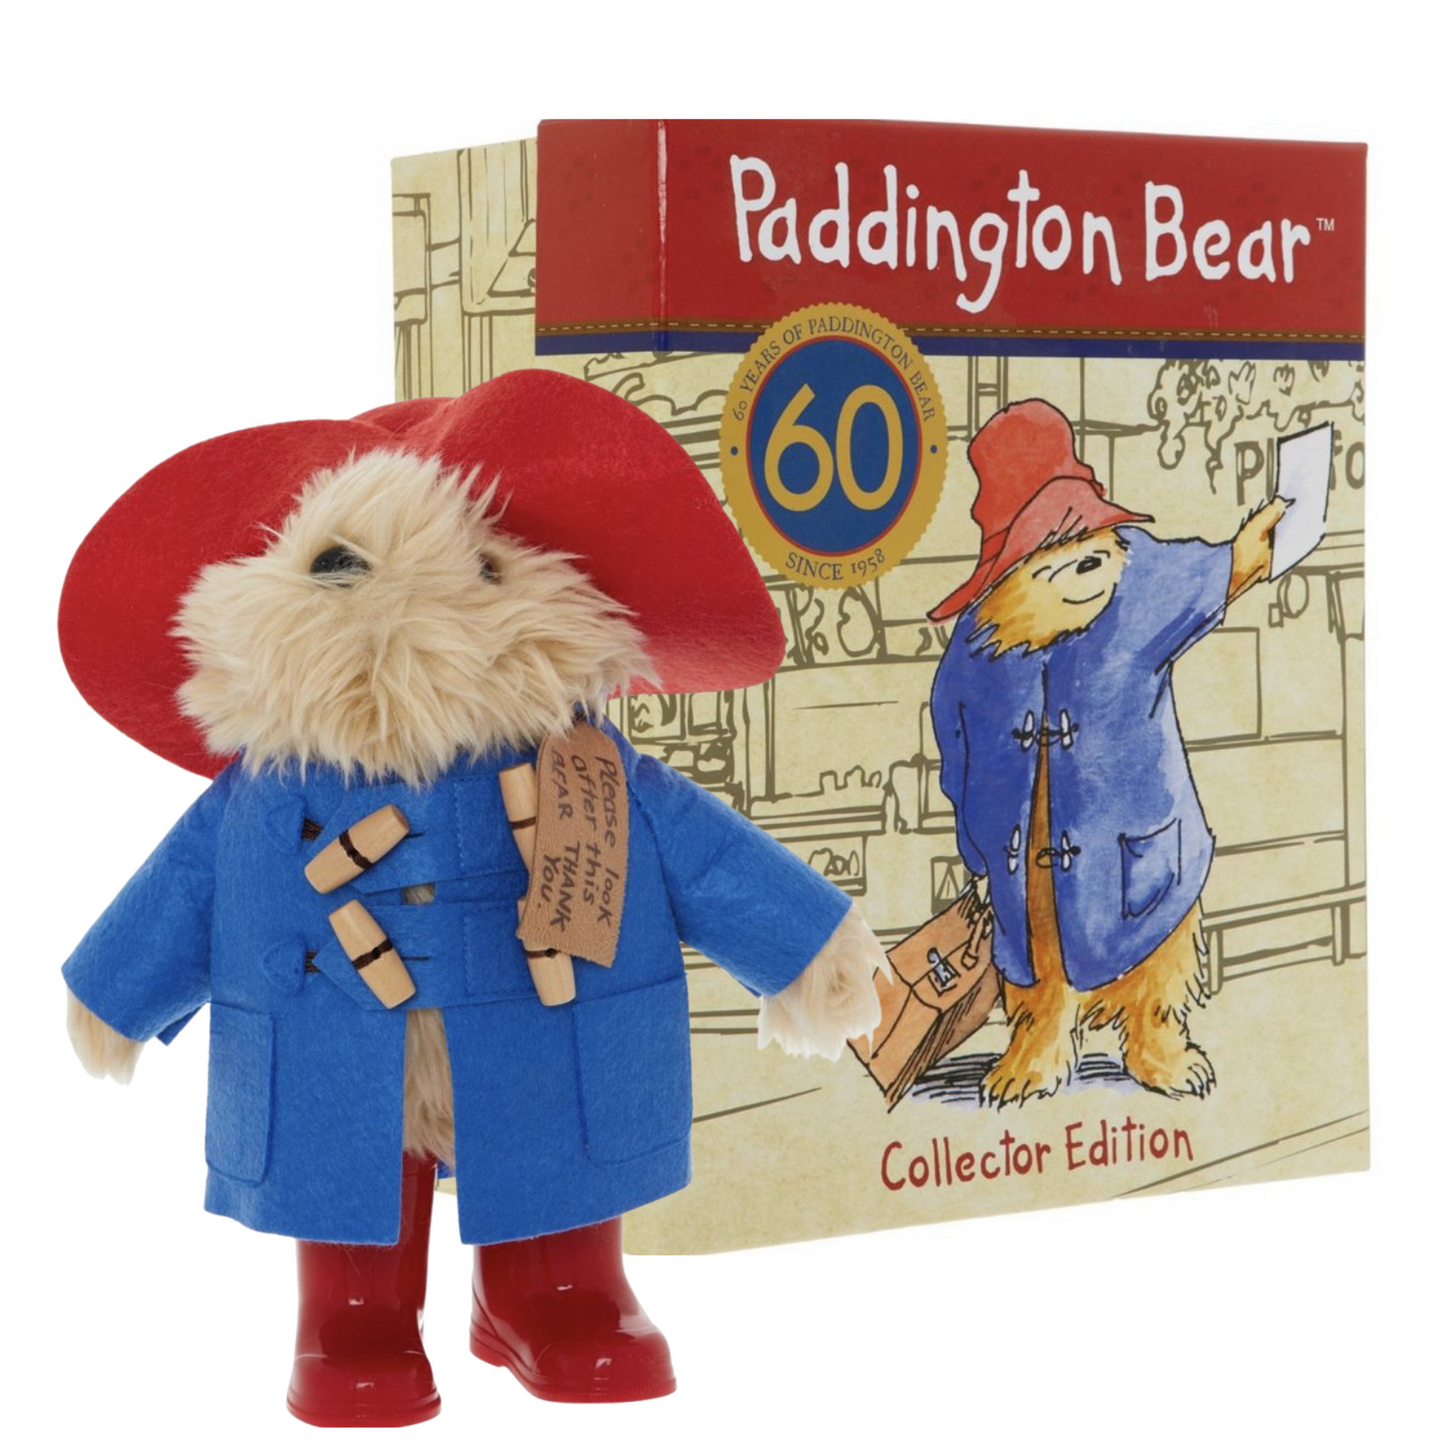 Collectors Edition 60th Anniversary Boxed Paddington Bear